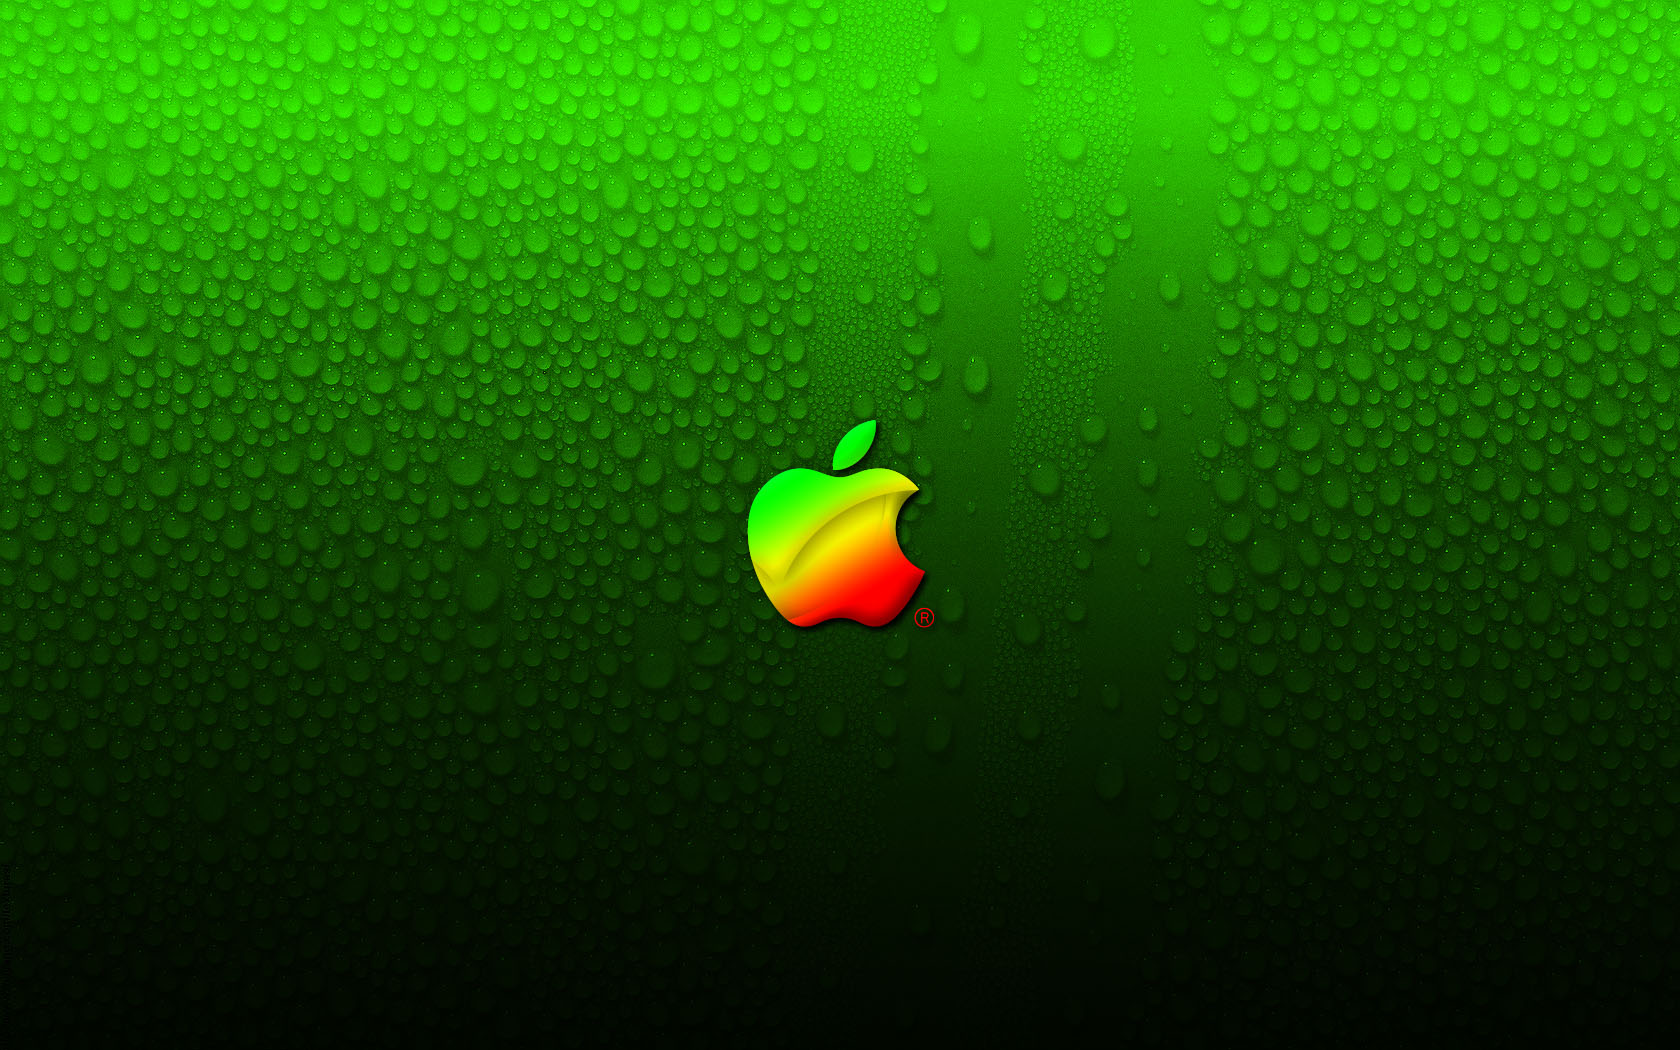  Best Hd Apple Wallpapers Free Apple Wallpapers Desktop Backgrounds